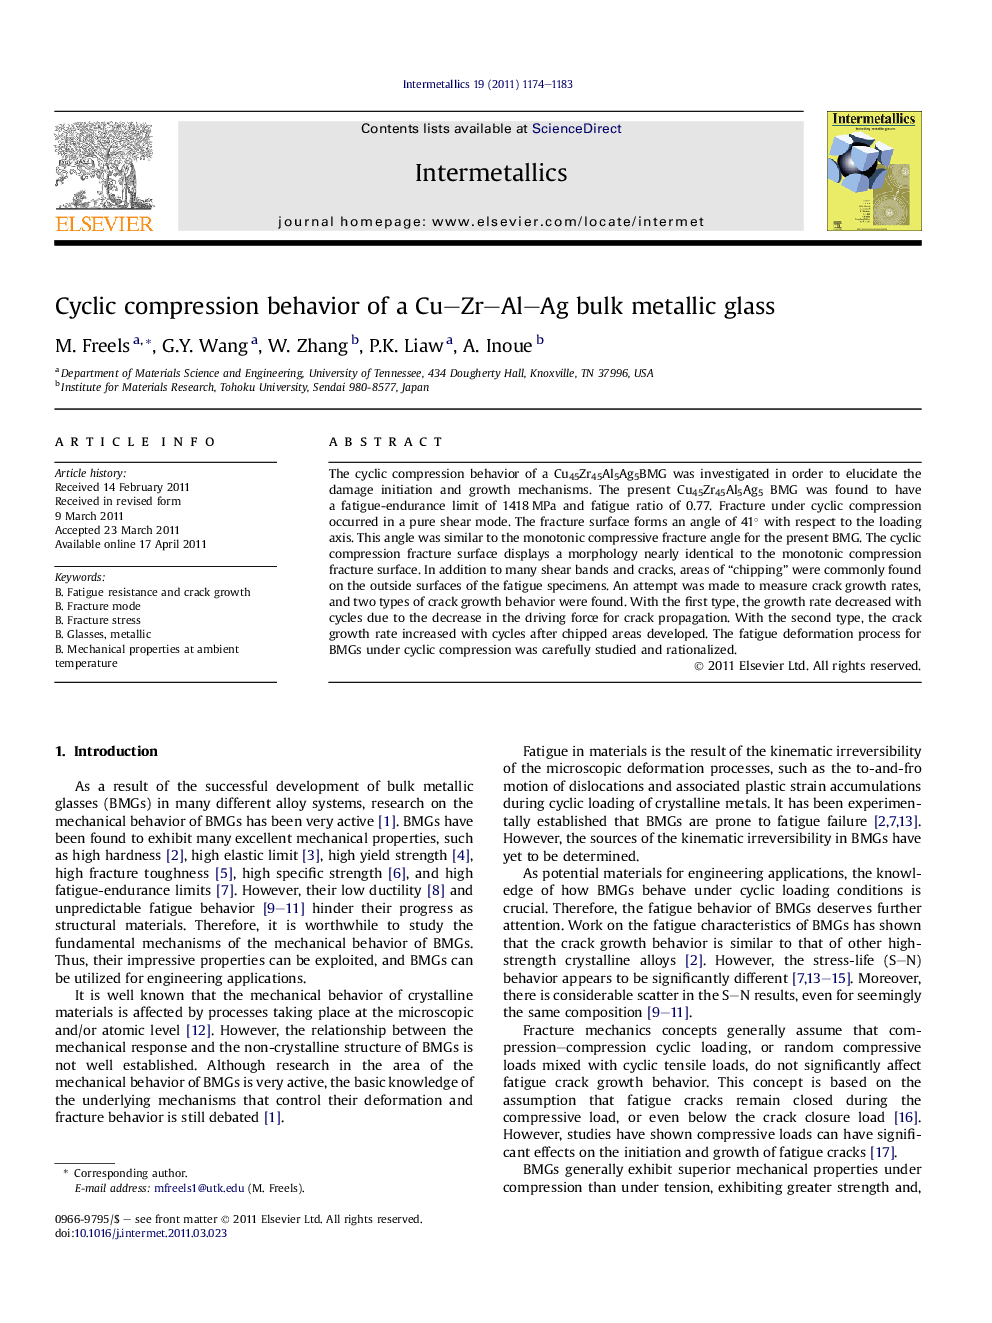 Cyclic compression behavior of a Cu–Zr–Al–Ag bulk metallic glass